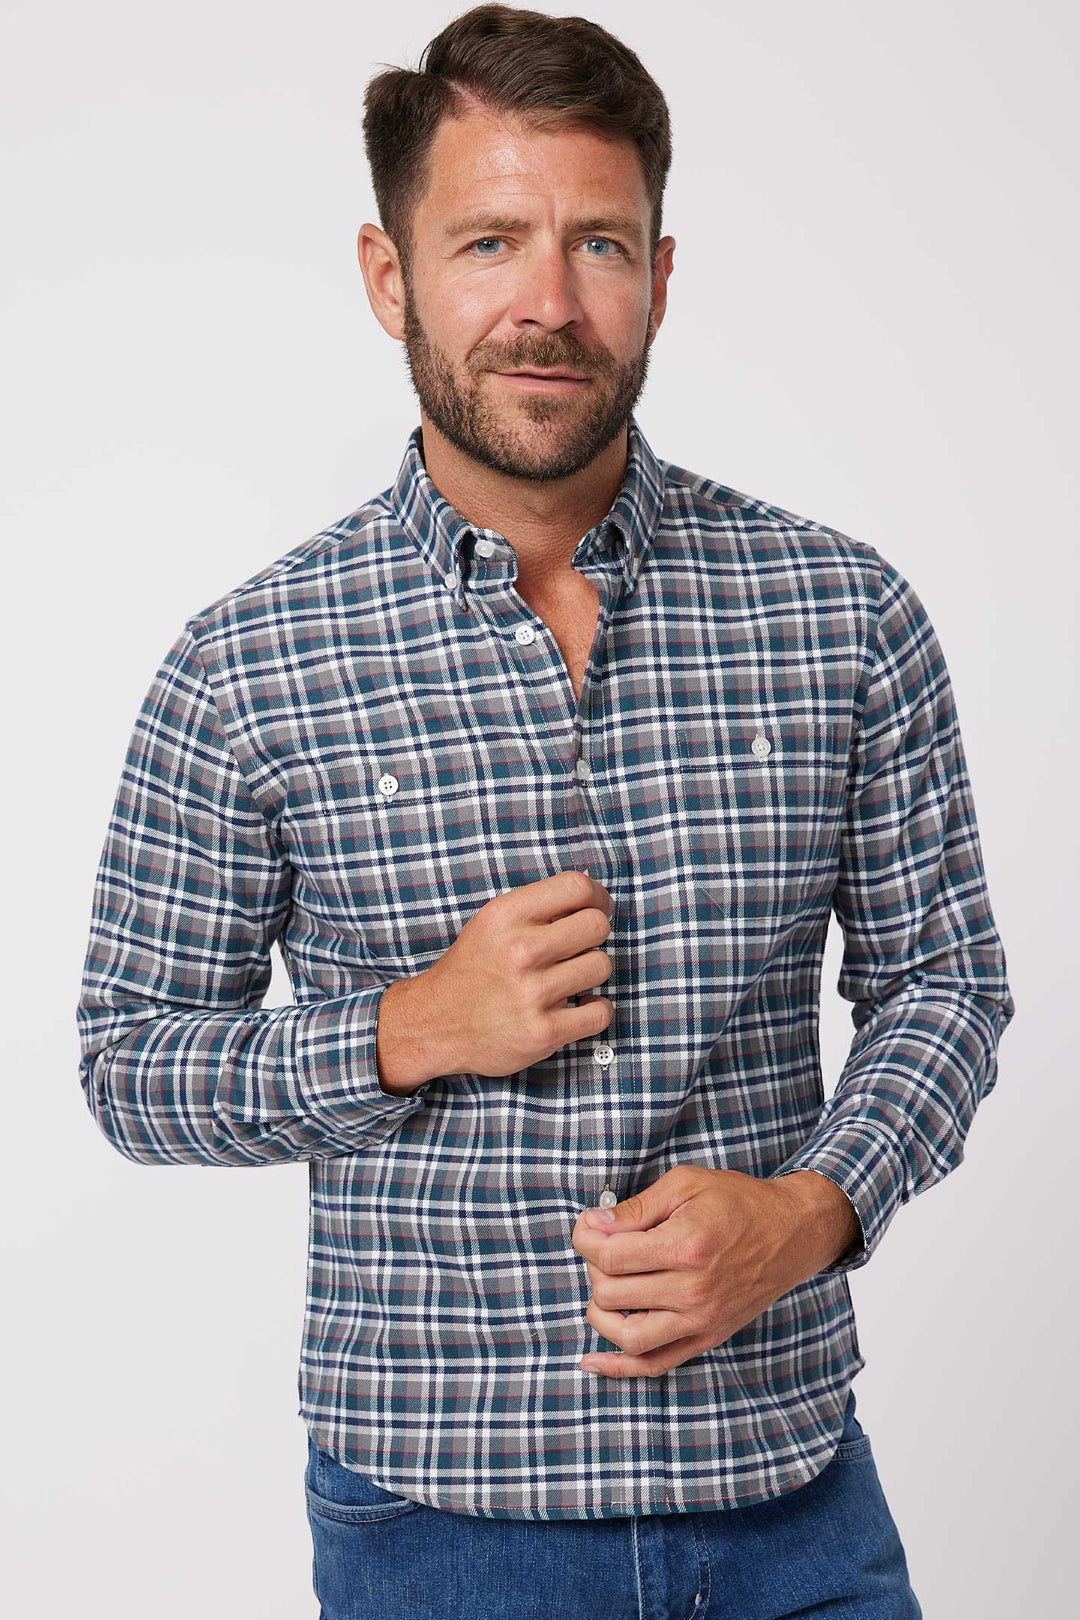 Buy Sequoia Plaid Flannel Button-Down Shirt for Short Men | Ash & Erie   Flannel Everyday Shirt